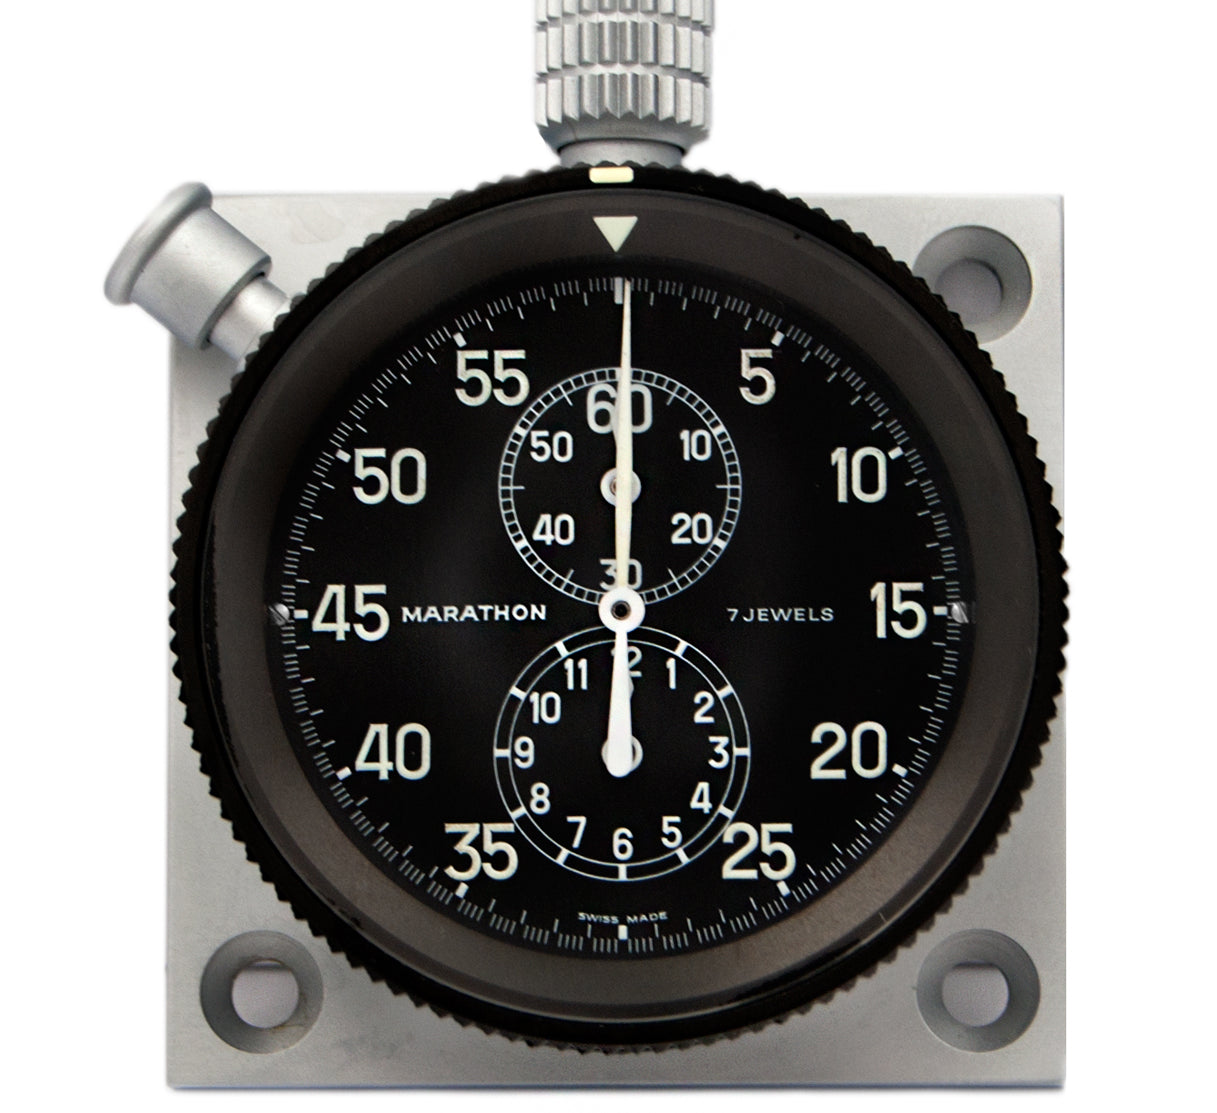 Interruption Type Stopwatch With 16 Jewel movement (ST194004) - marathonwatch